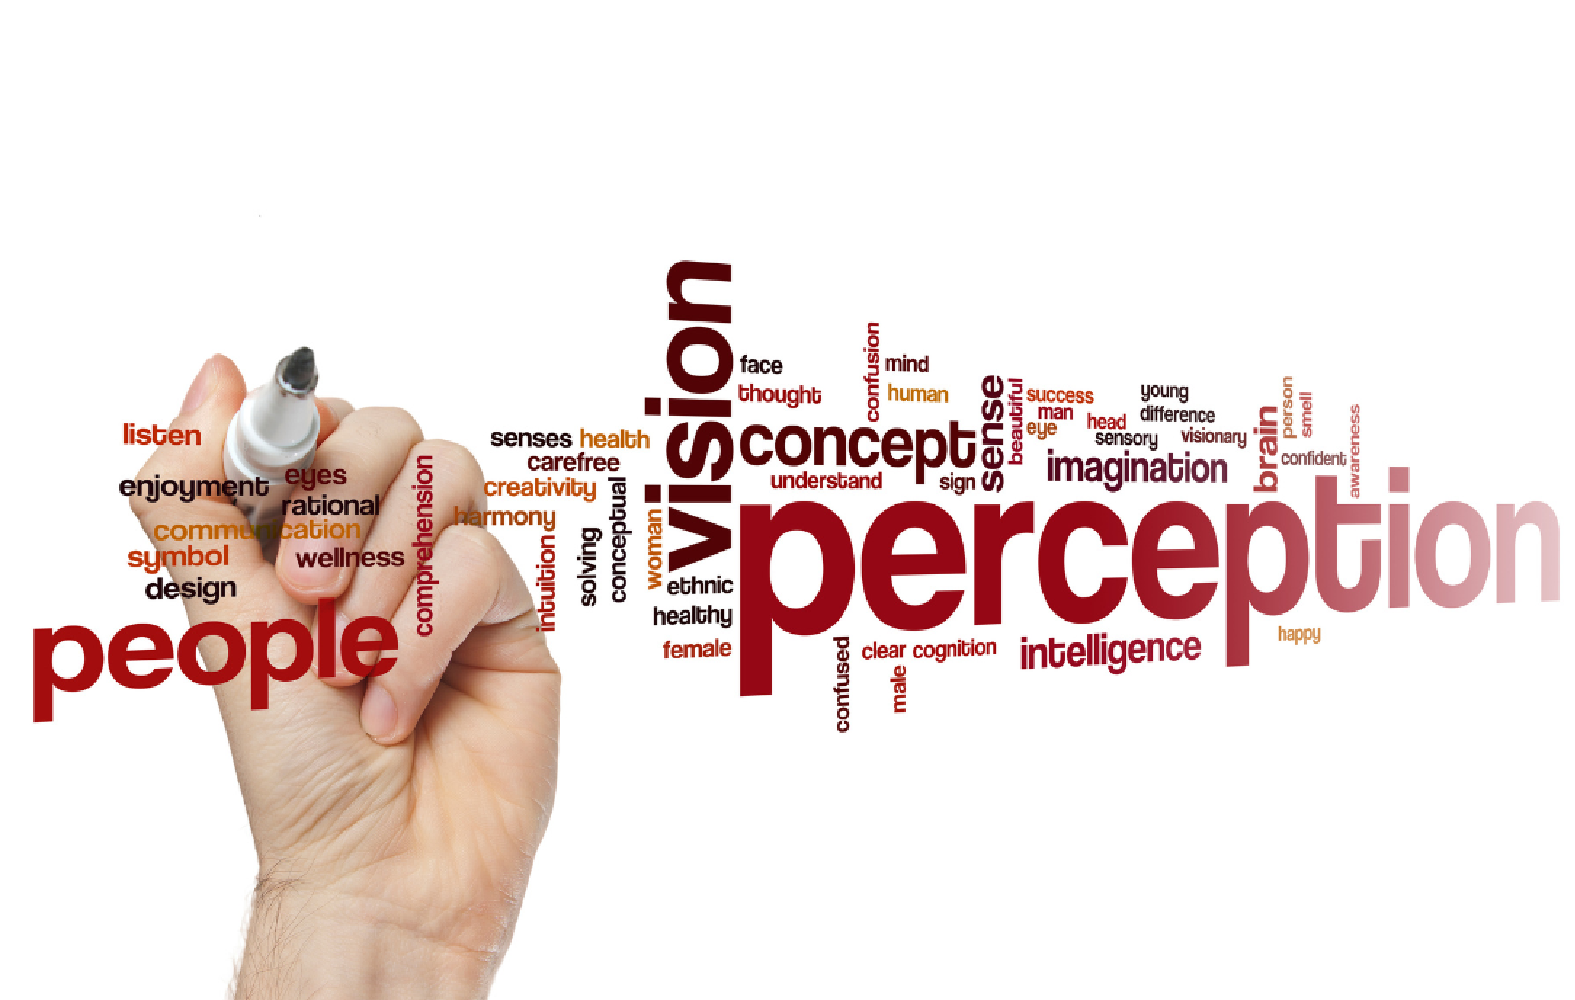 people-perception-vision